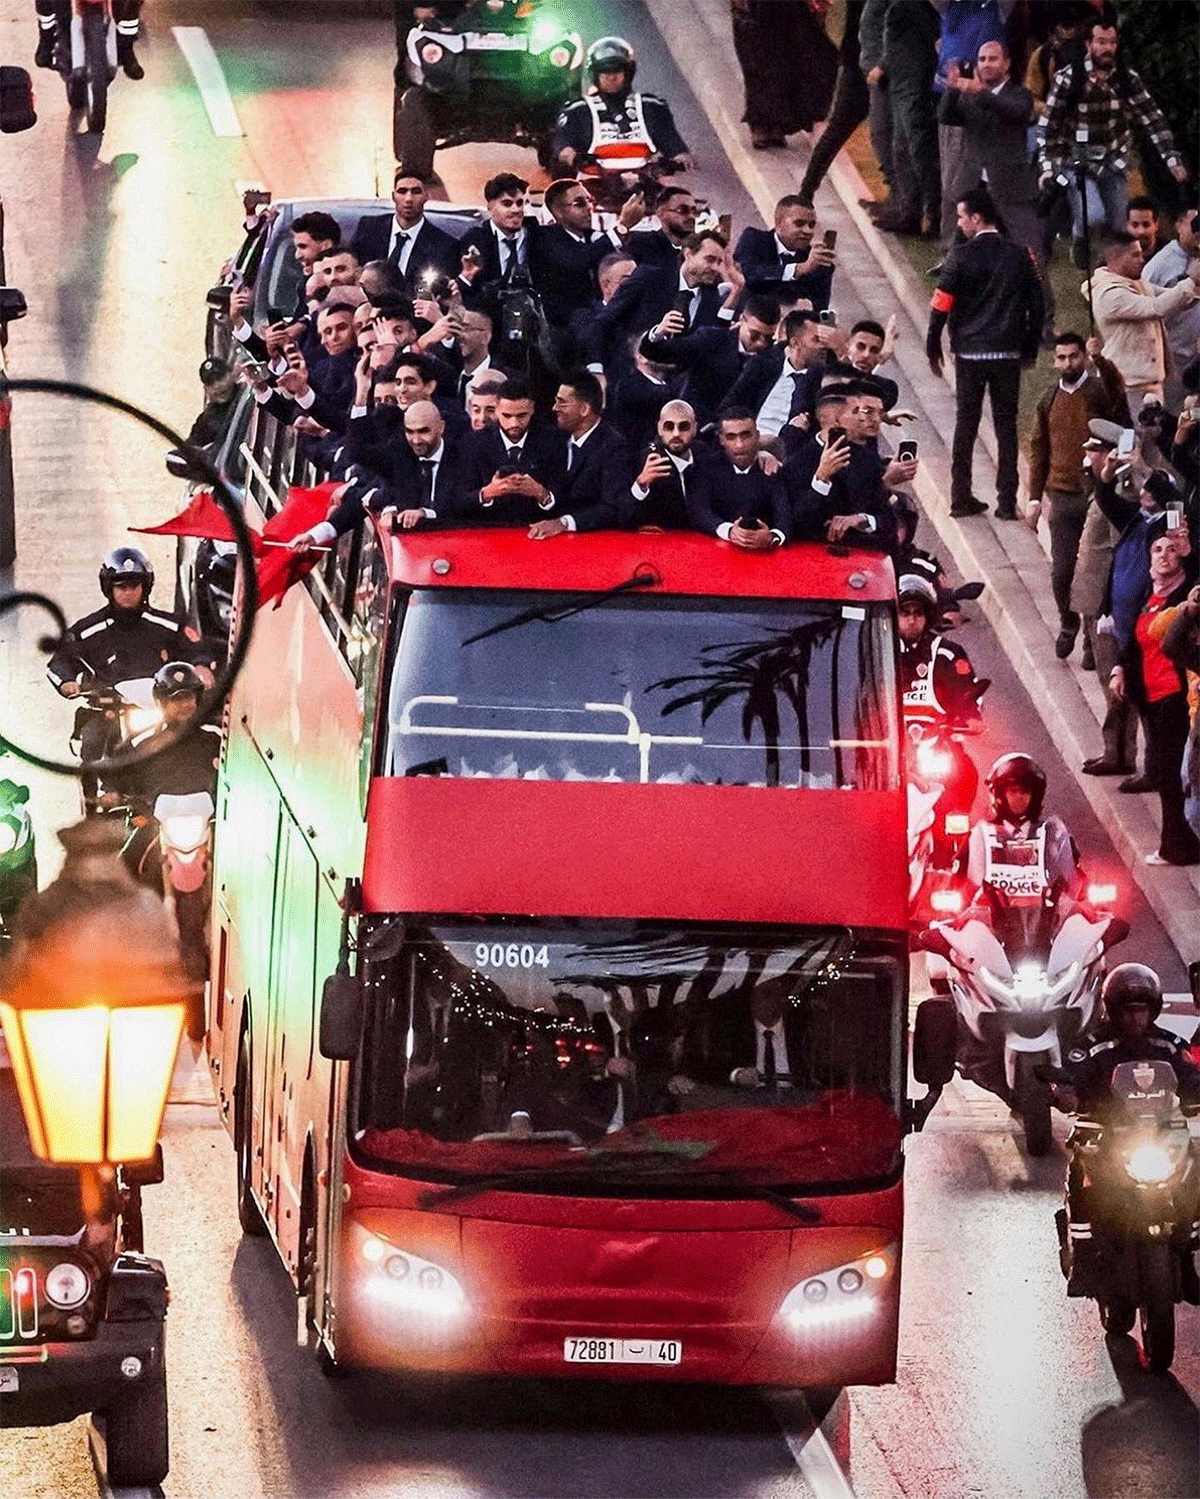 The Moroccon team atop the bus during the parade